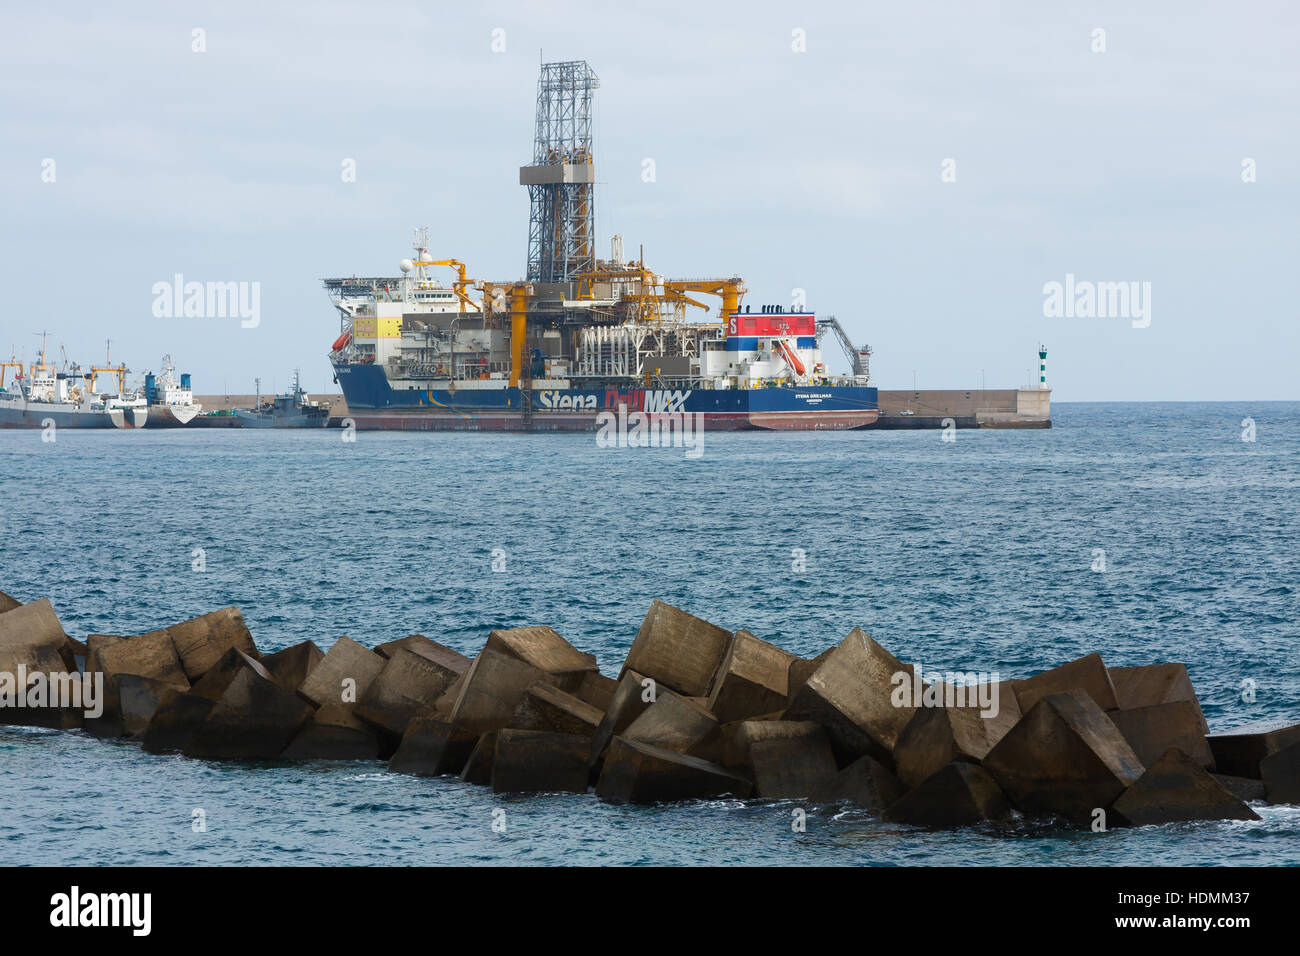 LAS PALMAS - Ottobre 10, 2016. Stena Drillship in porto. Foto Stock